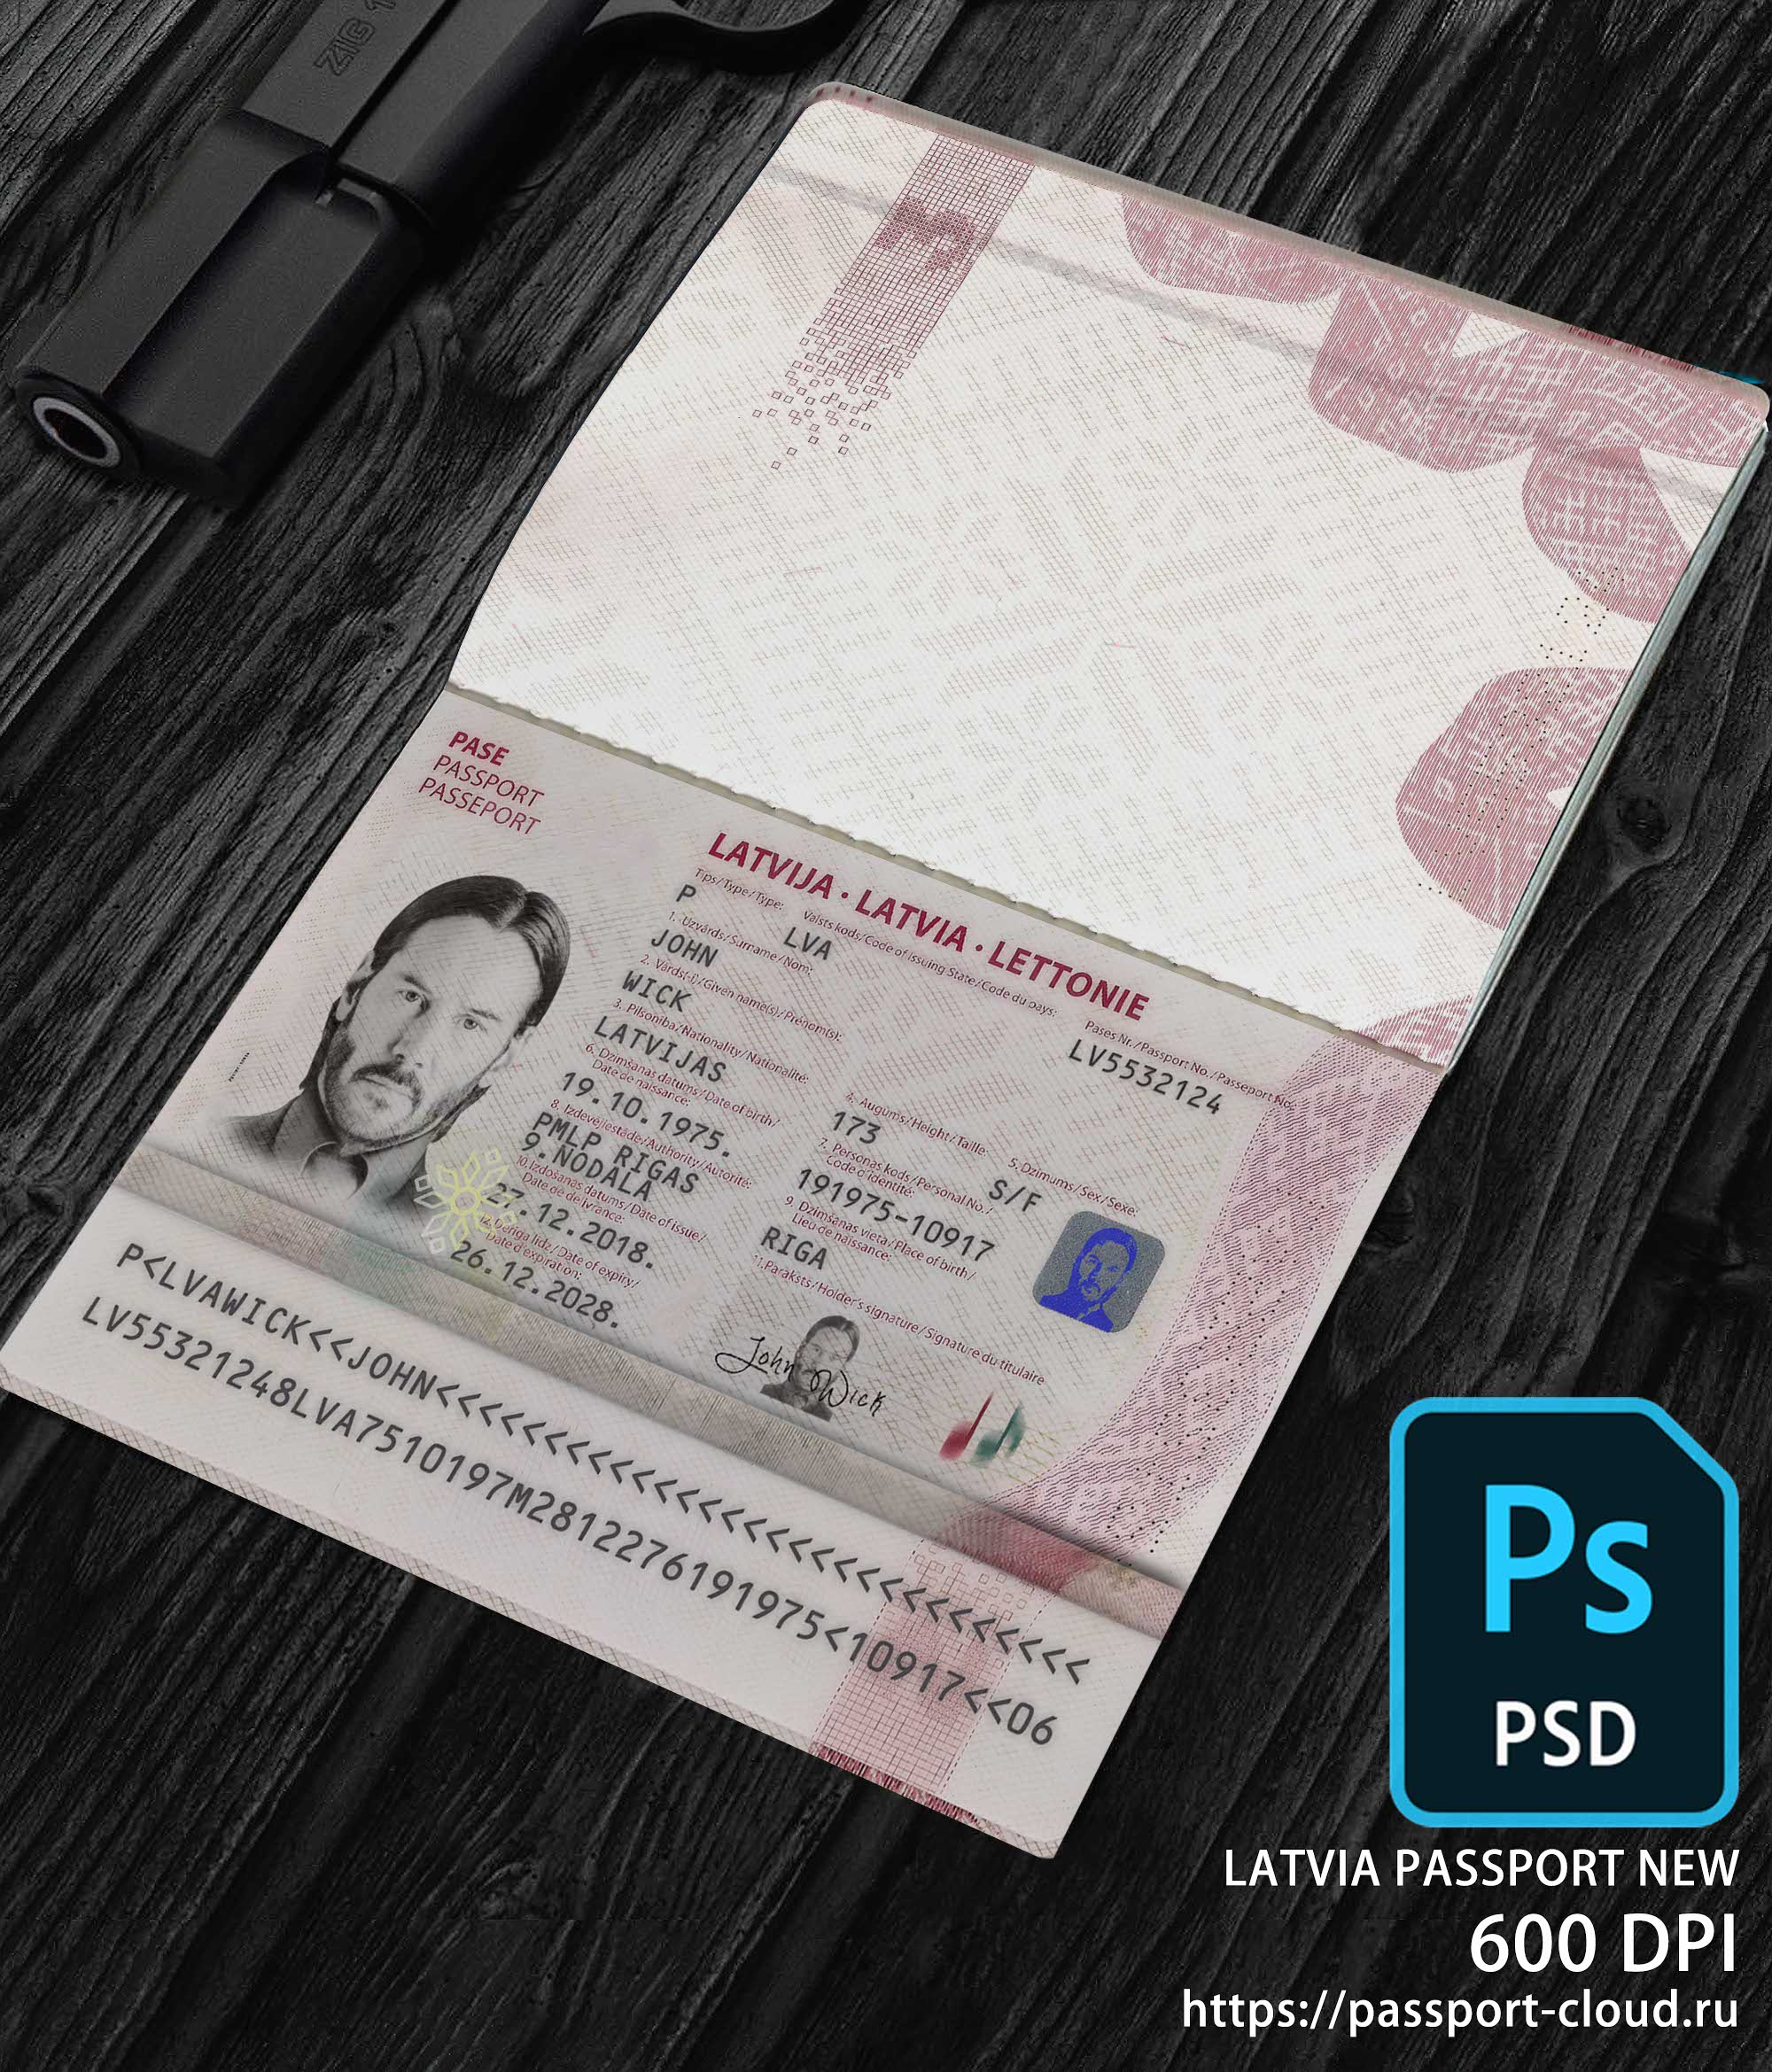 Latvia Passport 2015+ PSD1